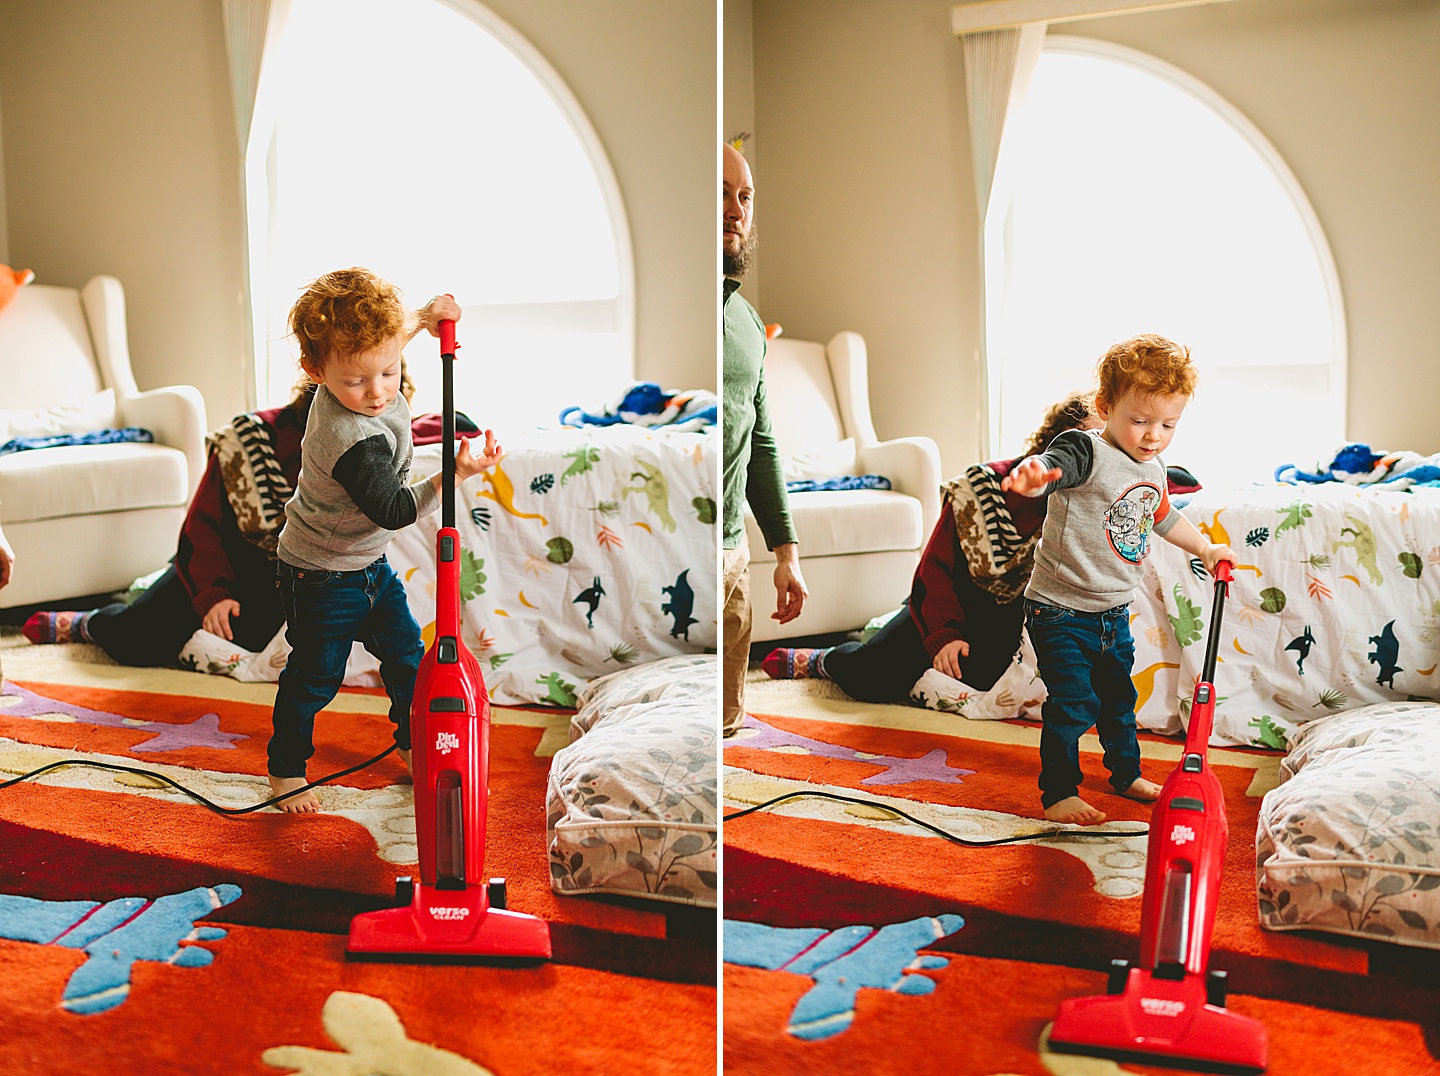 Toddler vacuuming his room